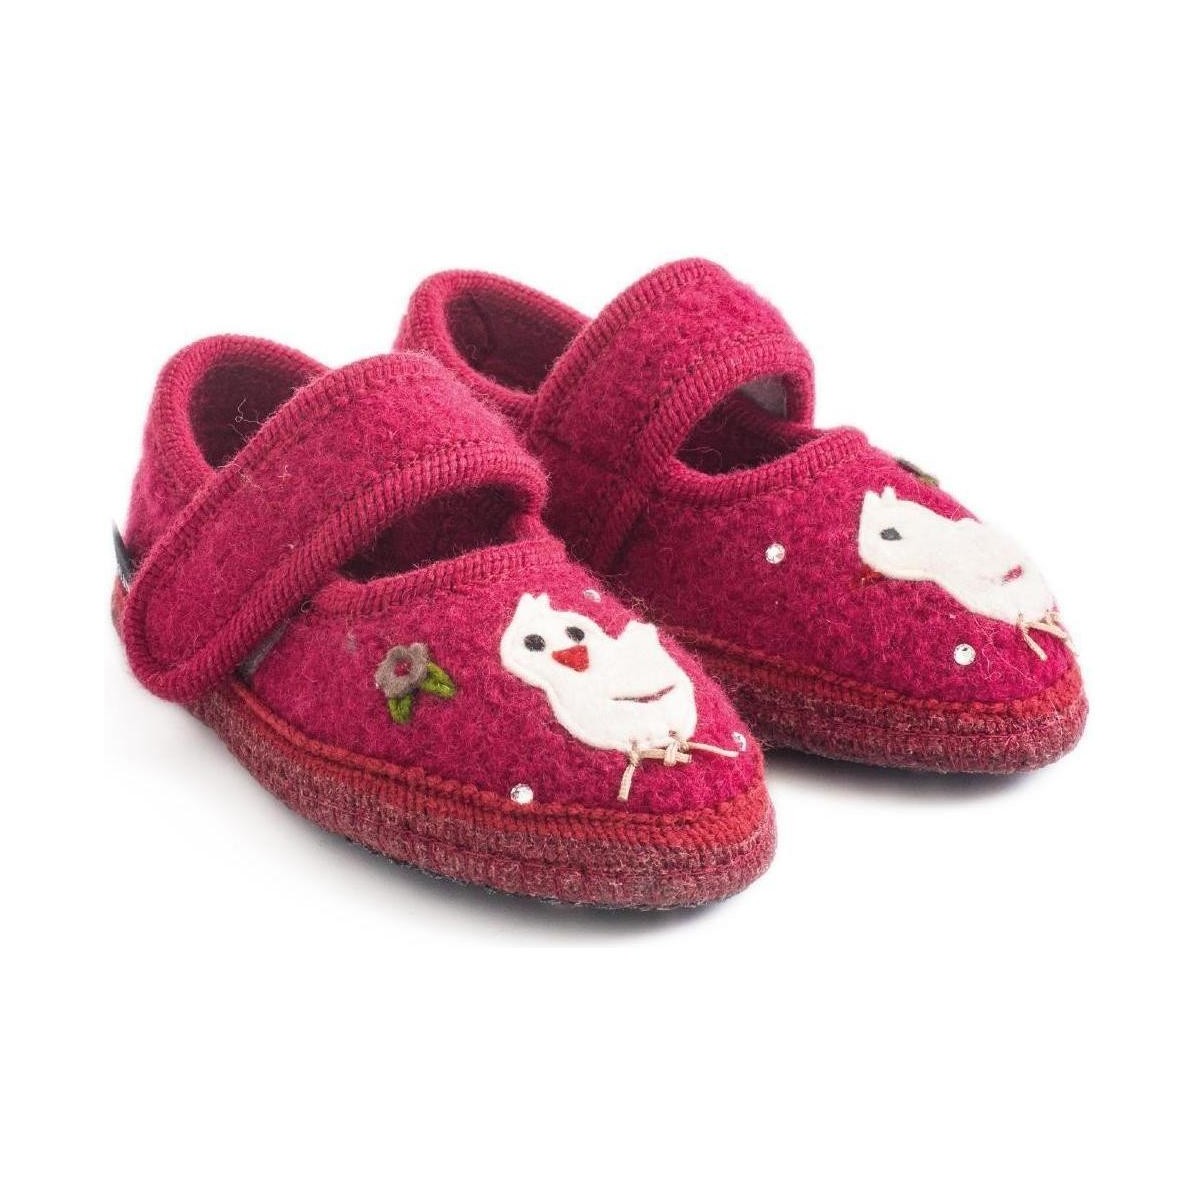 Zapatos Niños Pantuflas Haflinger 67306160 Rojo